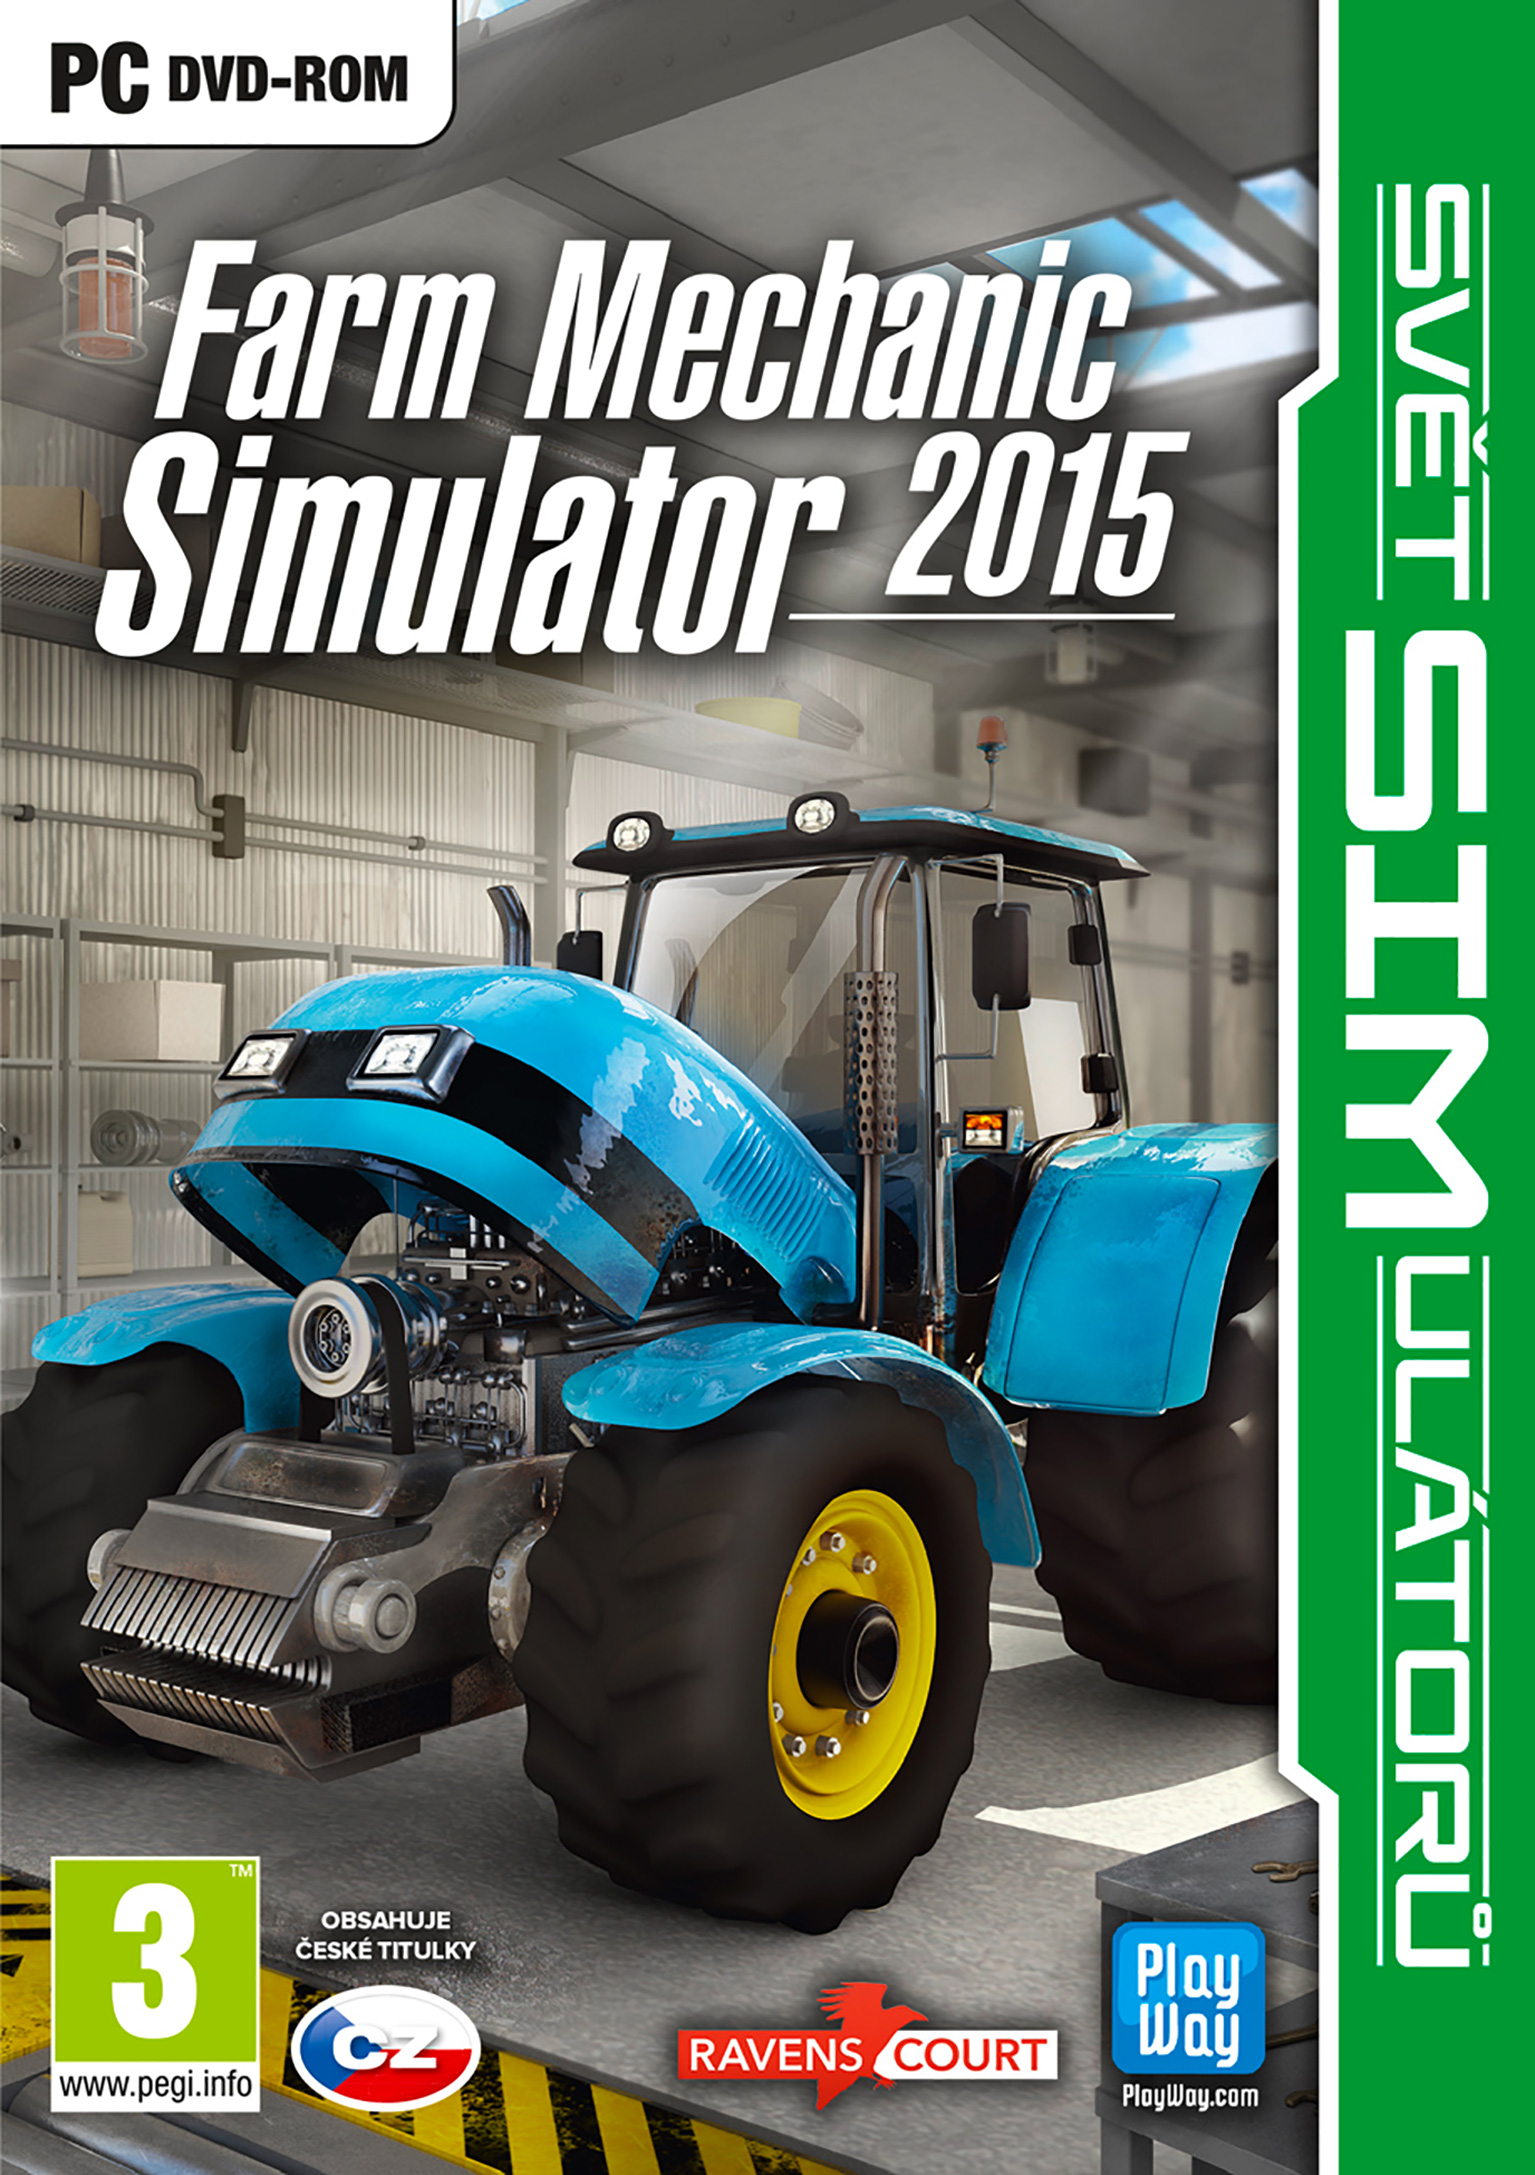 Farm Mechanic Simulator 2015 - pedn DVD obal